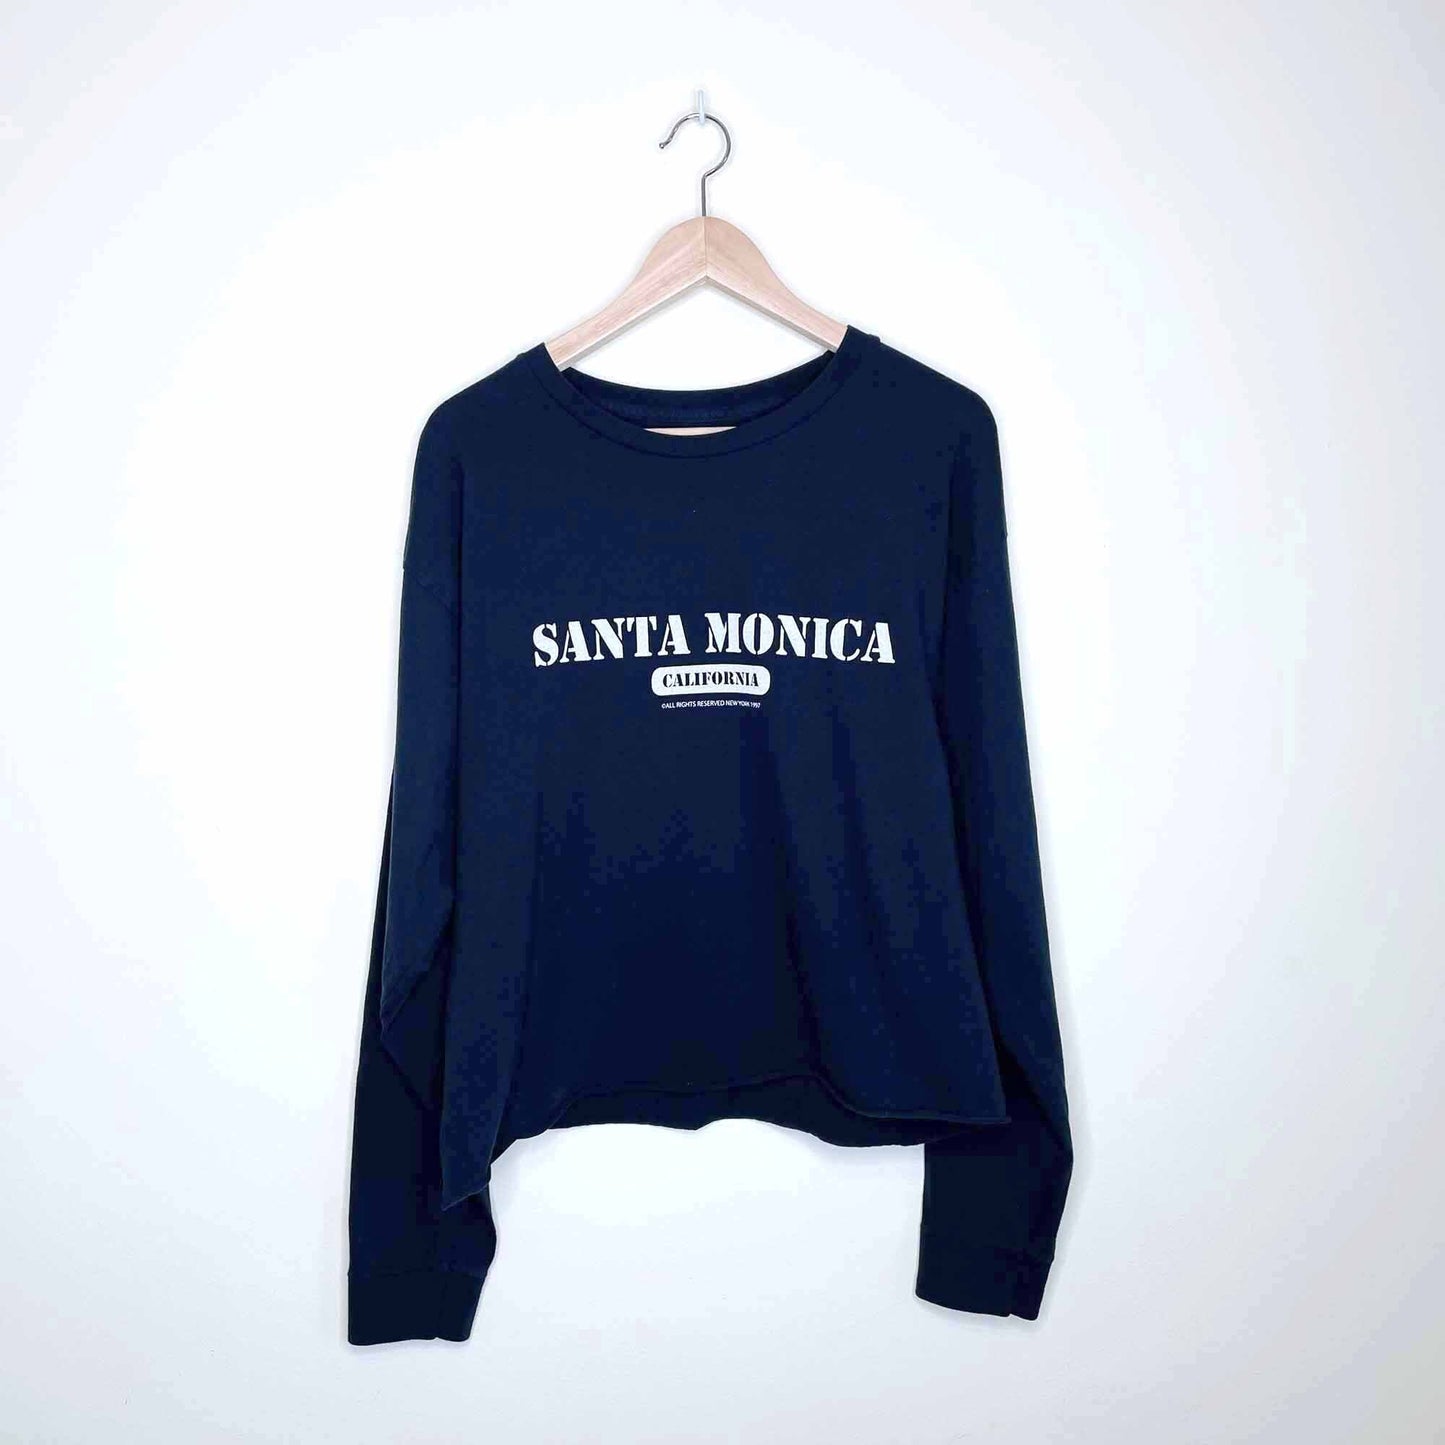 Brandy Melville John Galt Santa Monica shirt - OS